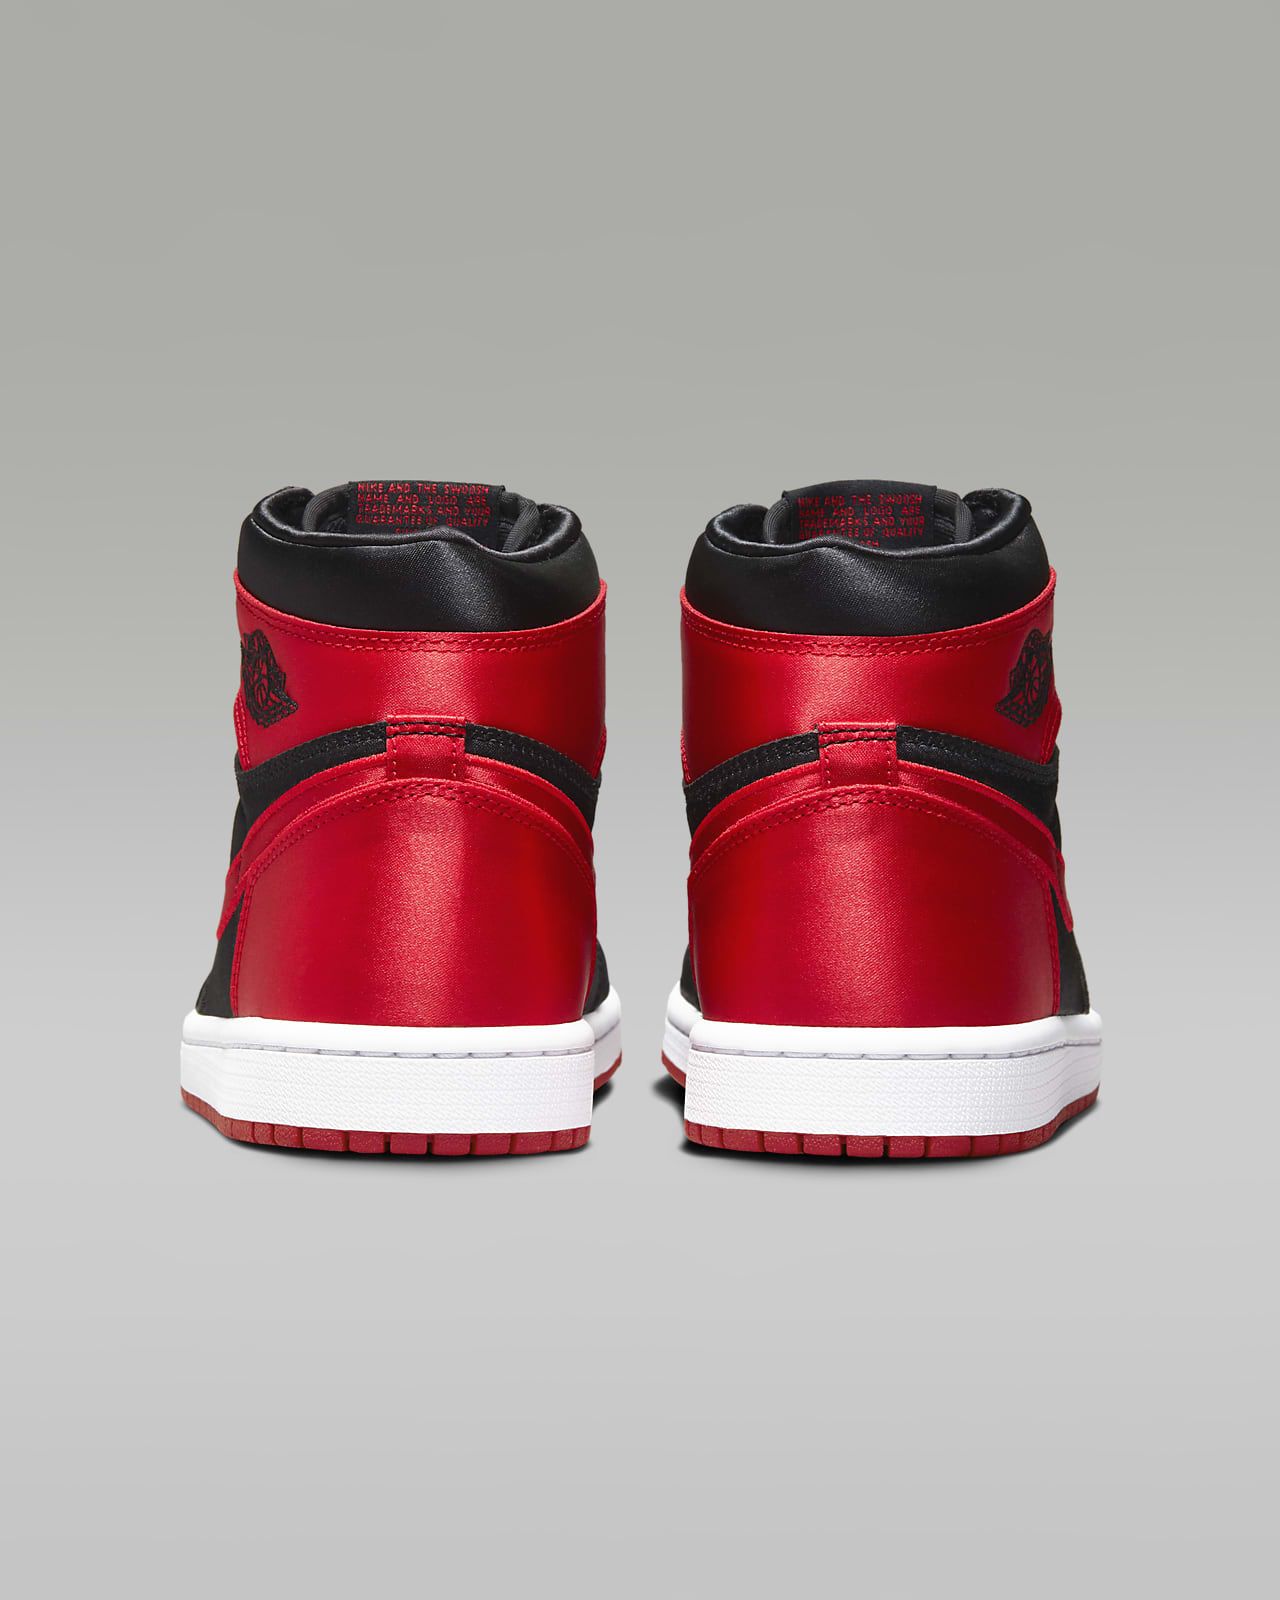 Air Jordan 1 High OG "Satin Bred" | Nike (US)